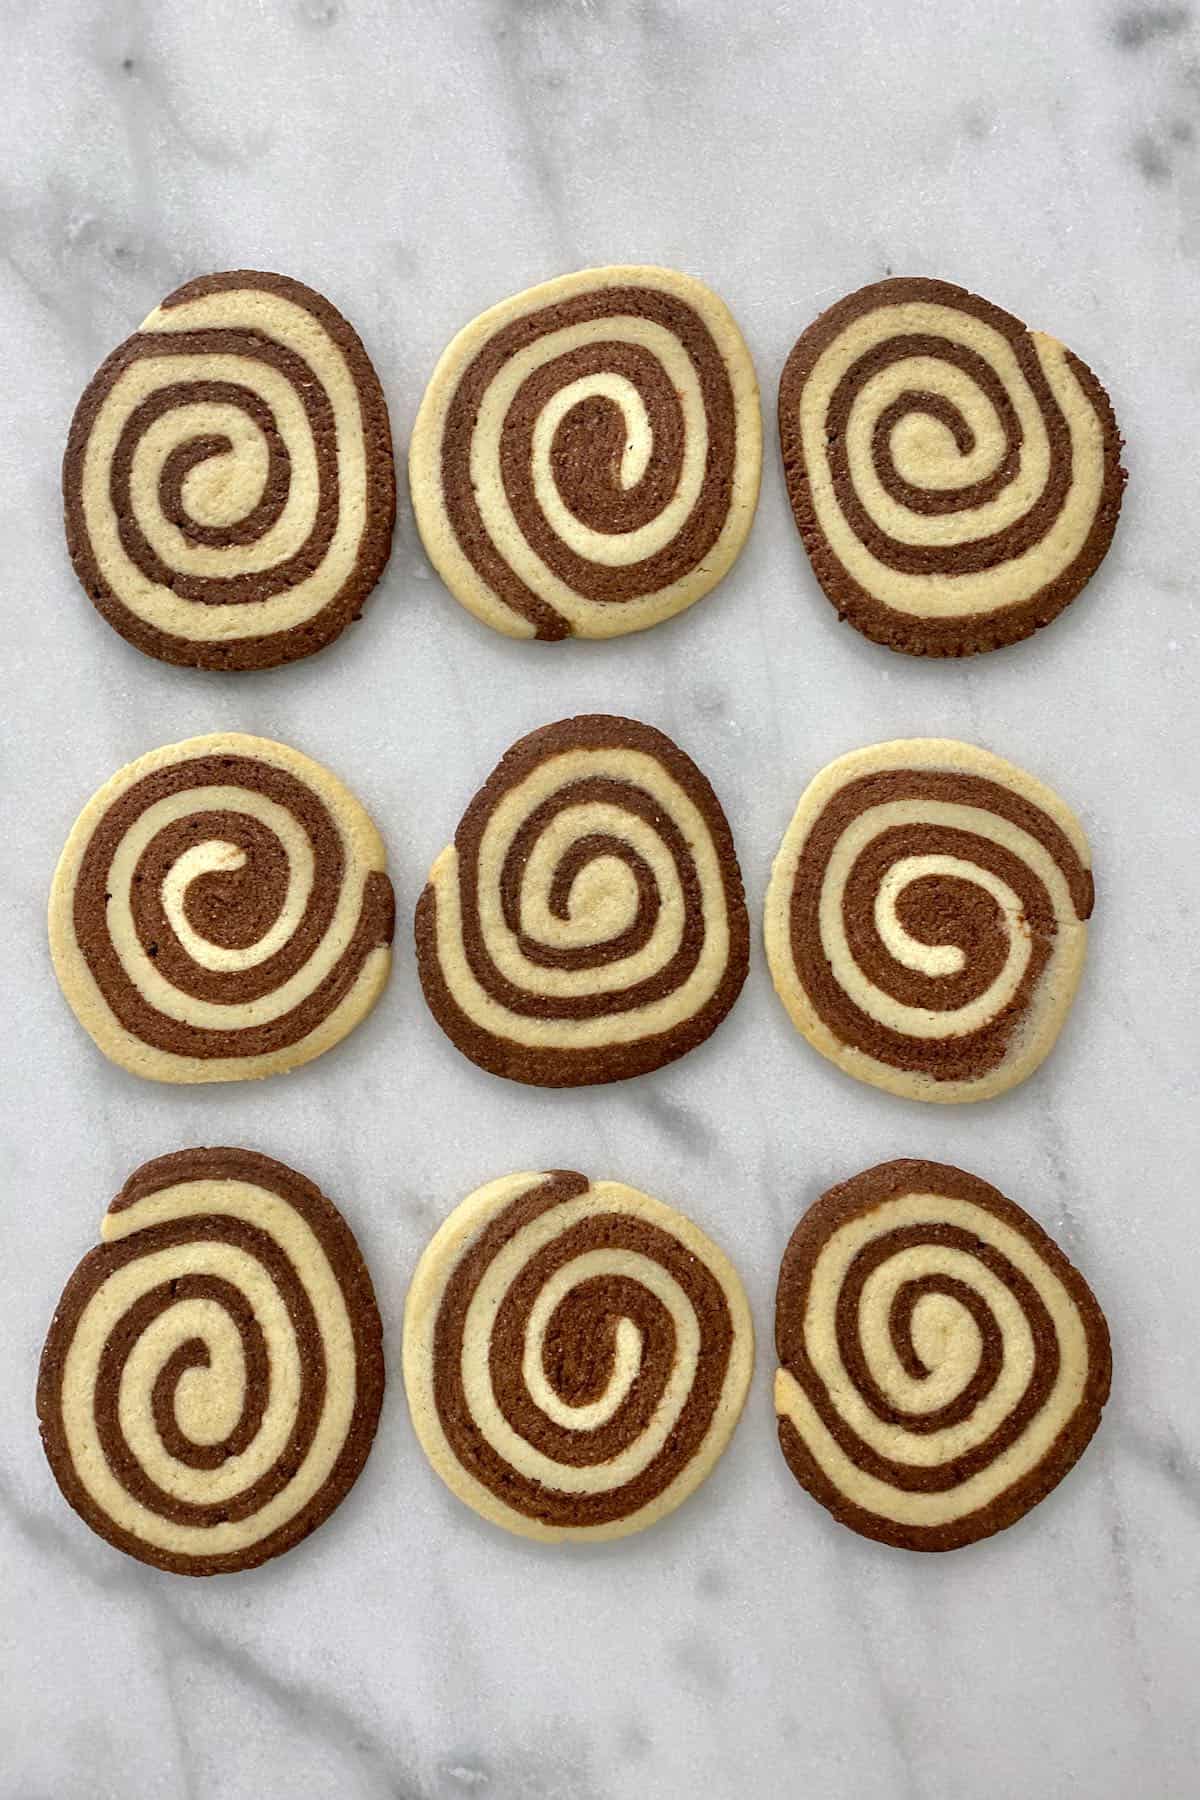 Nice pinwheel cookies on a flat surface